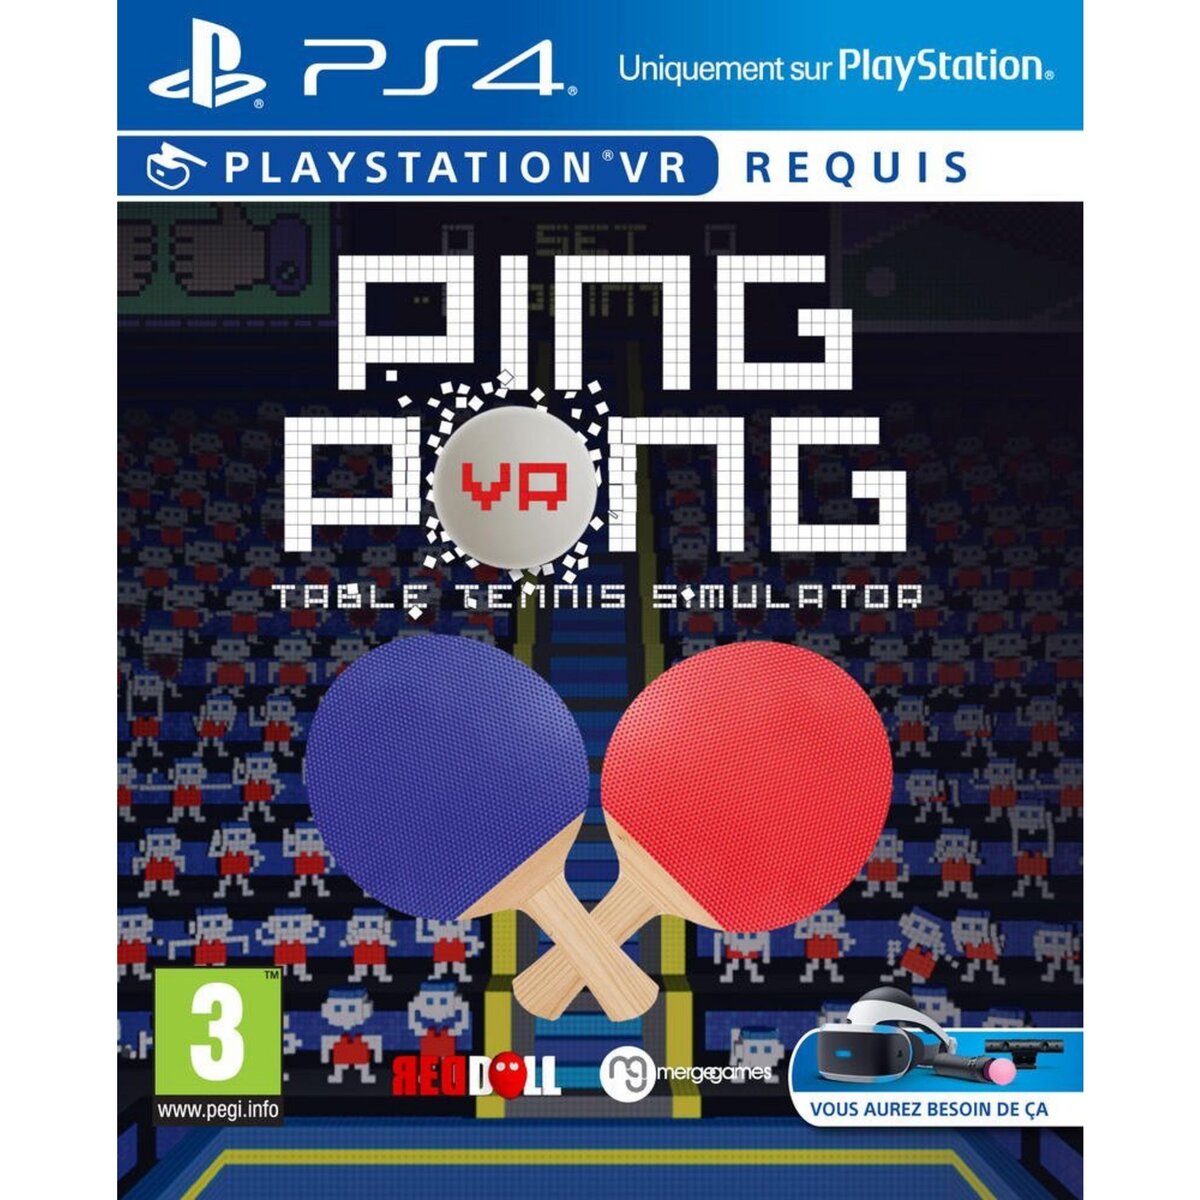 Ping Pong Table Tennis Simulator VR PS4